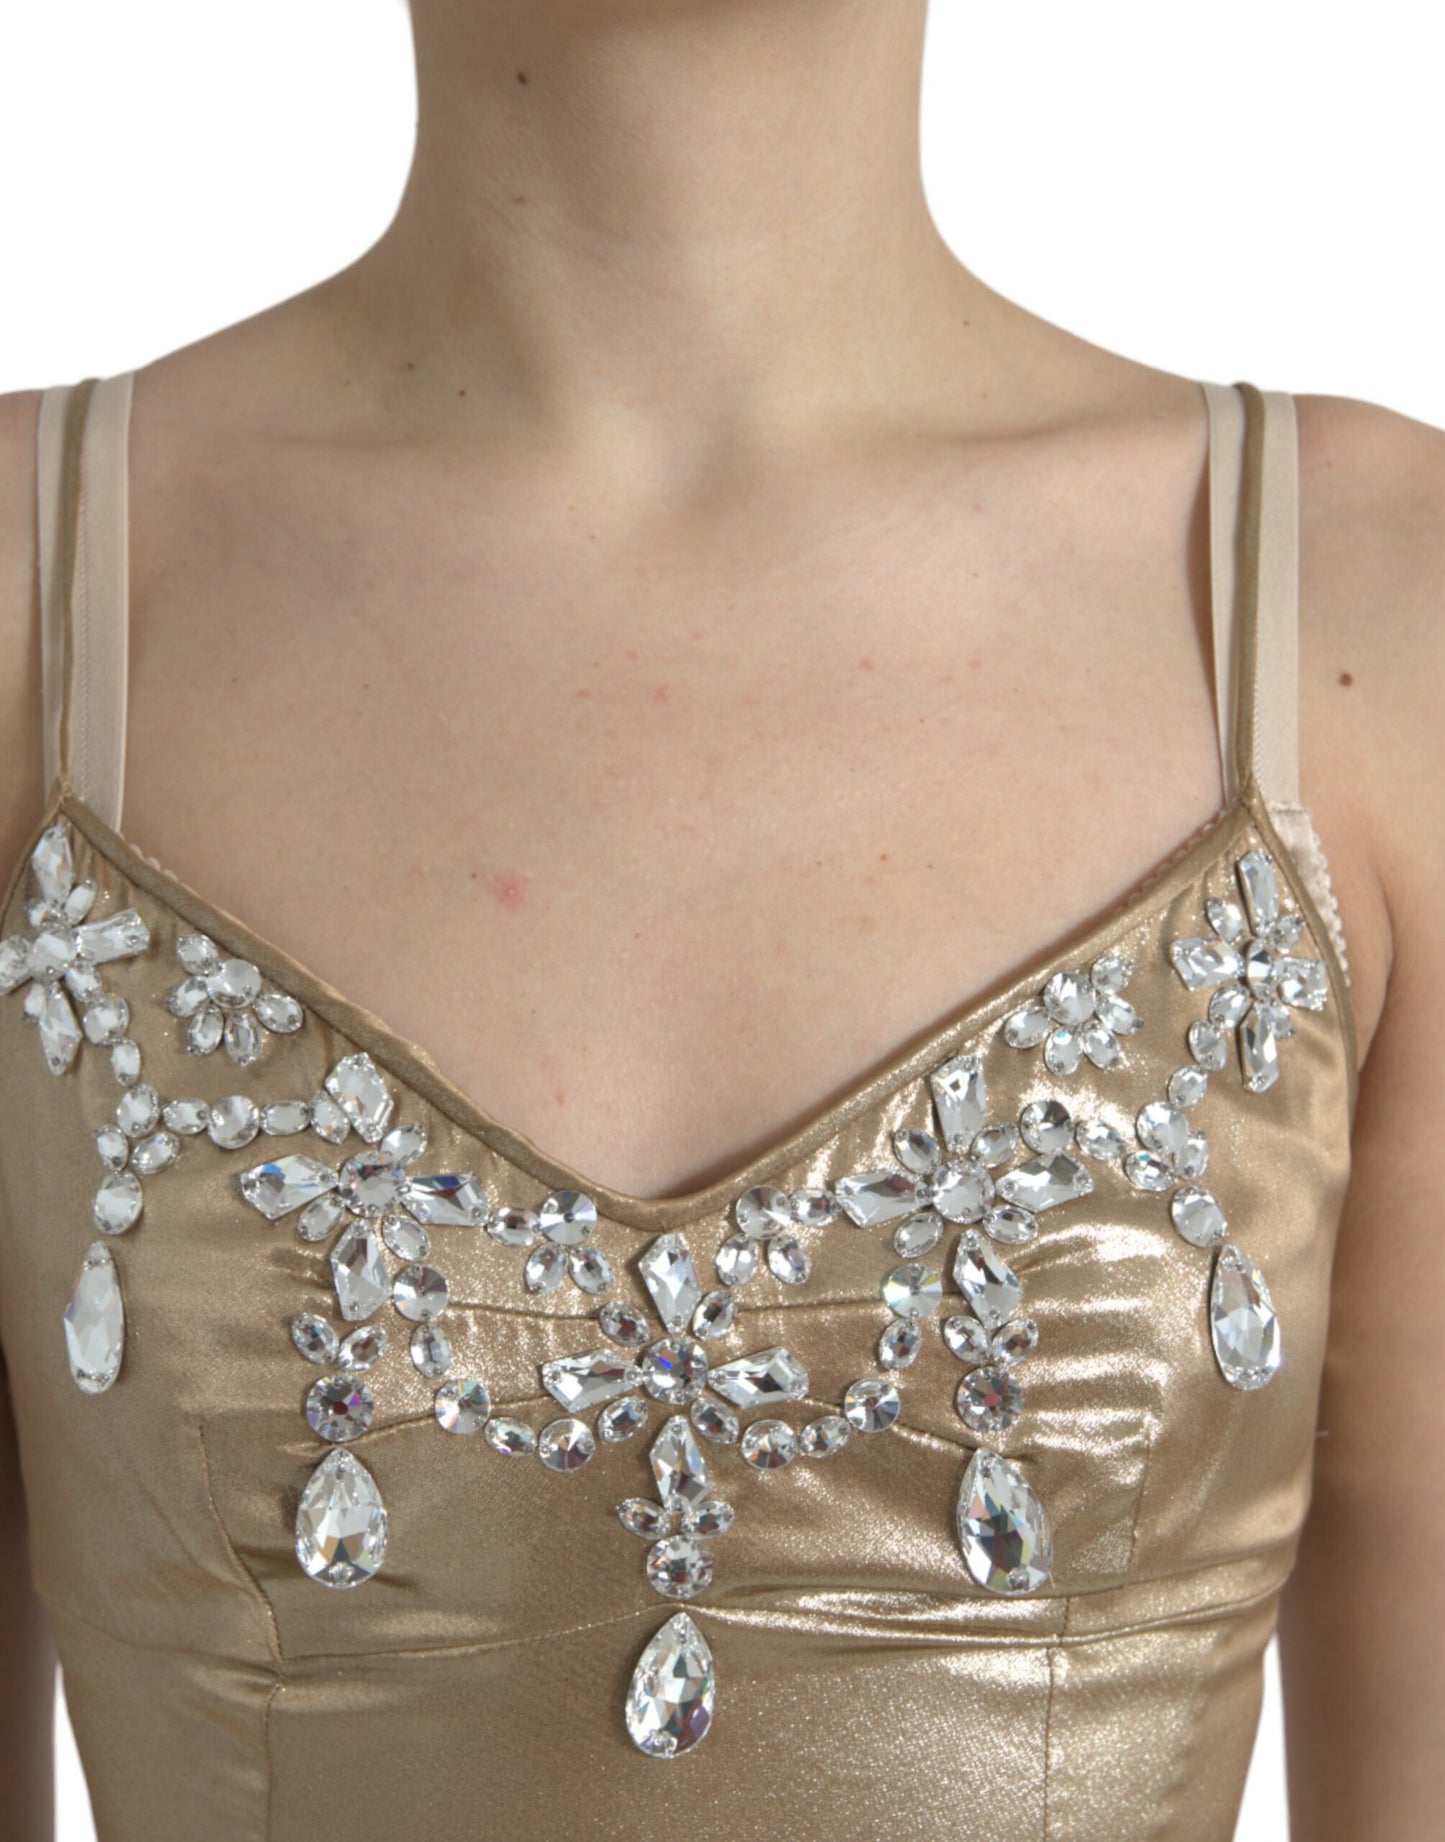 Elegant Metallic Gold Sheath Dress with Crystals